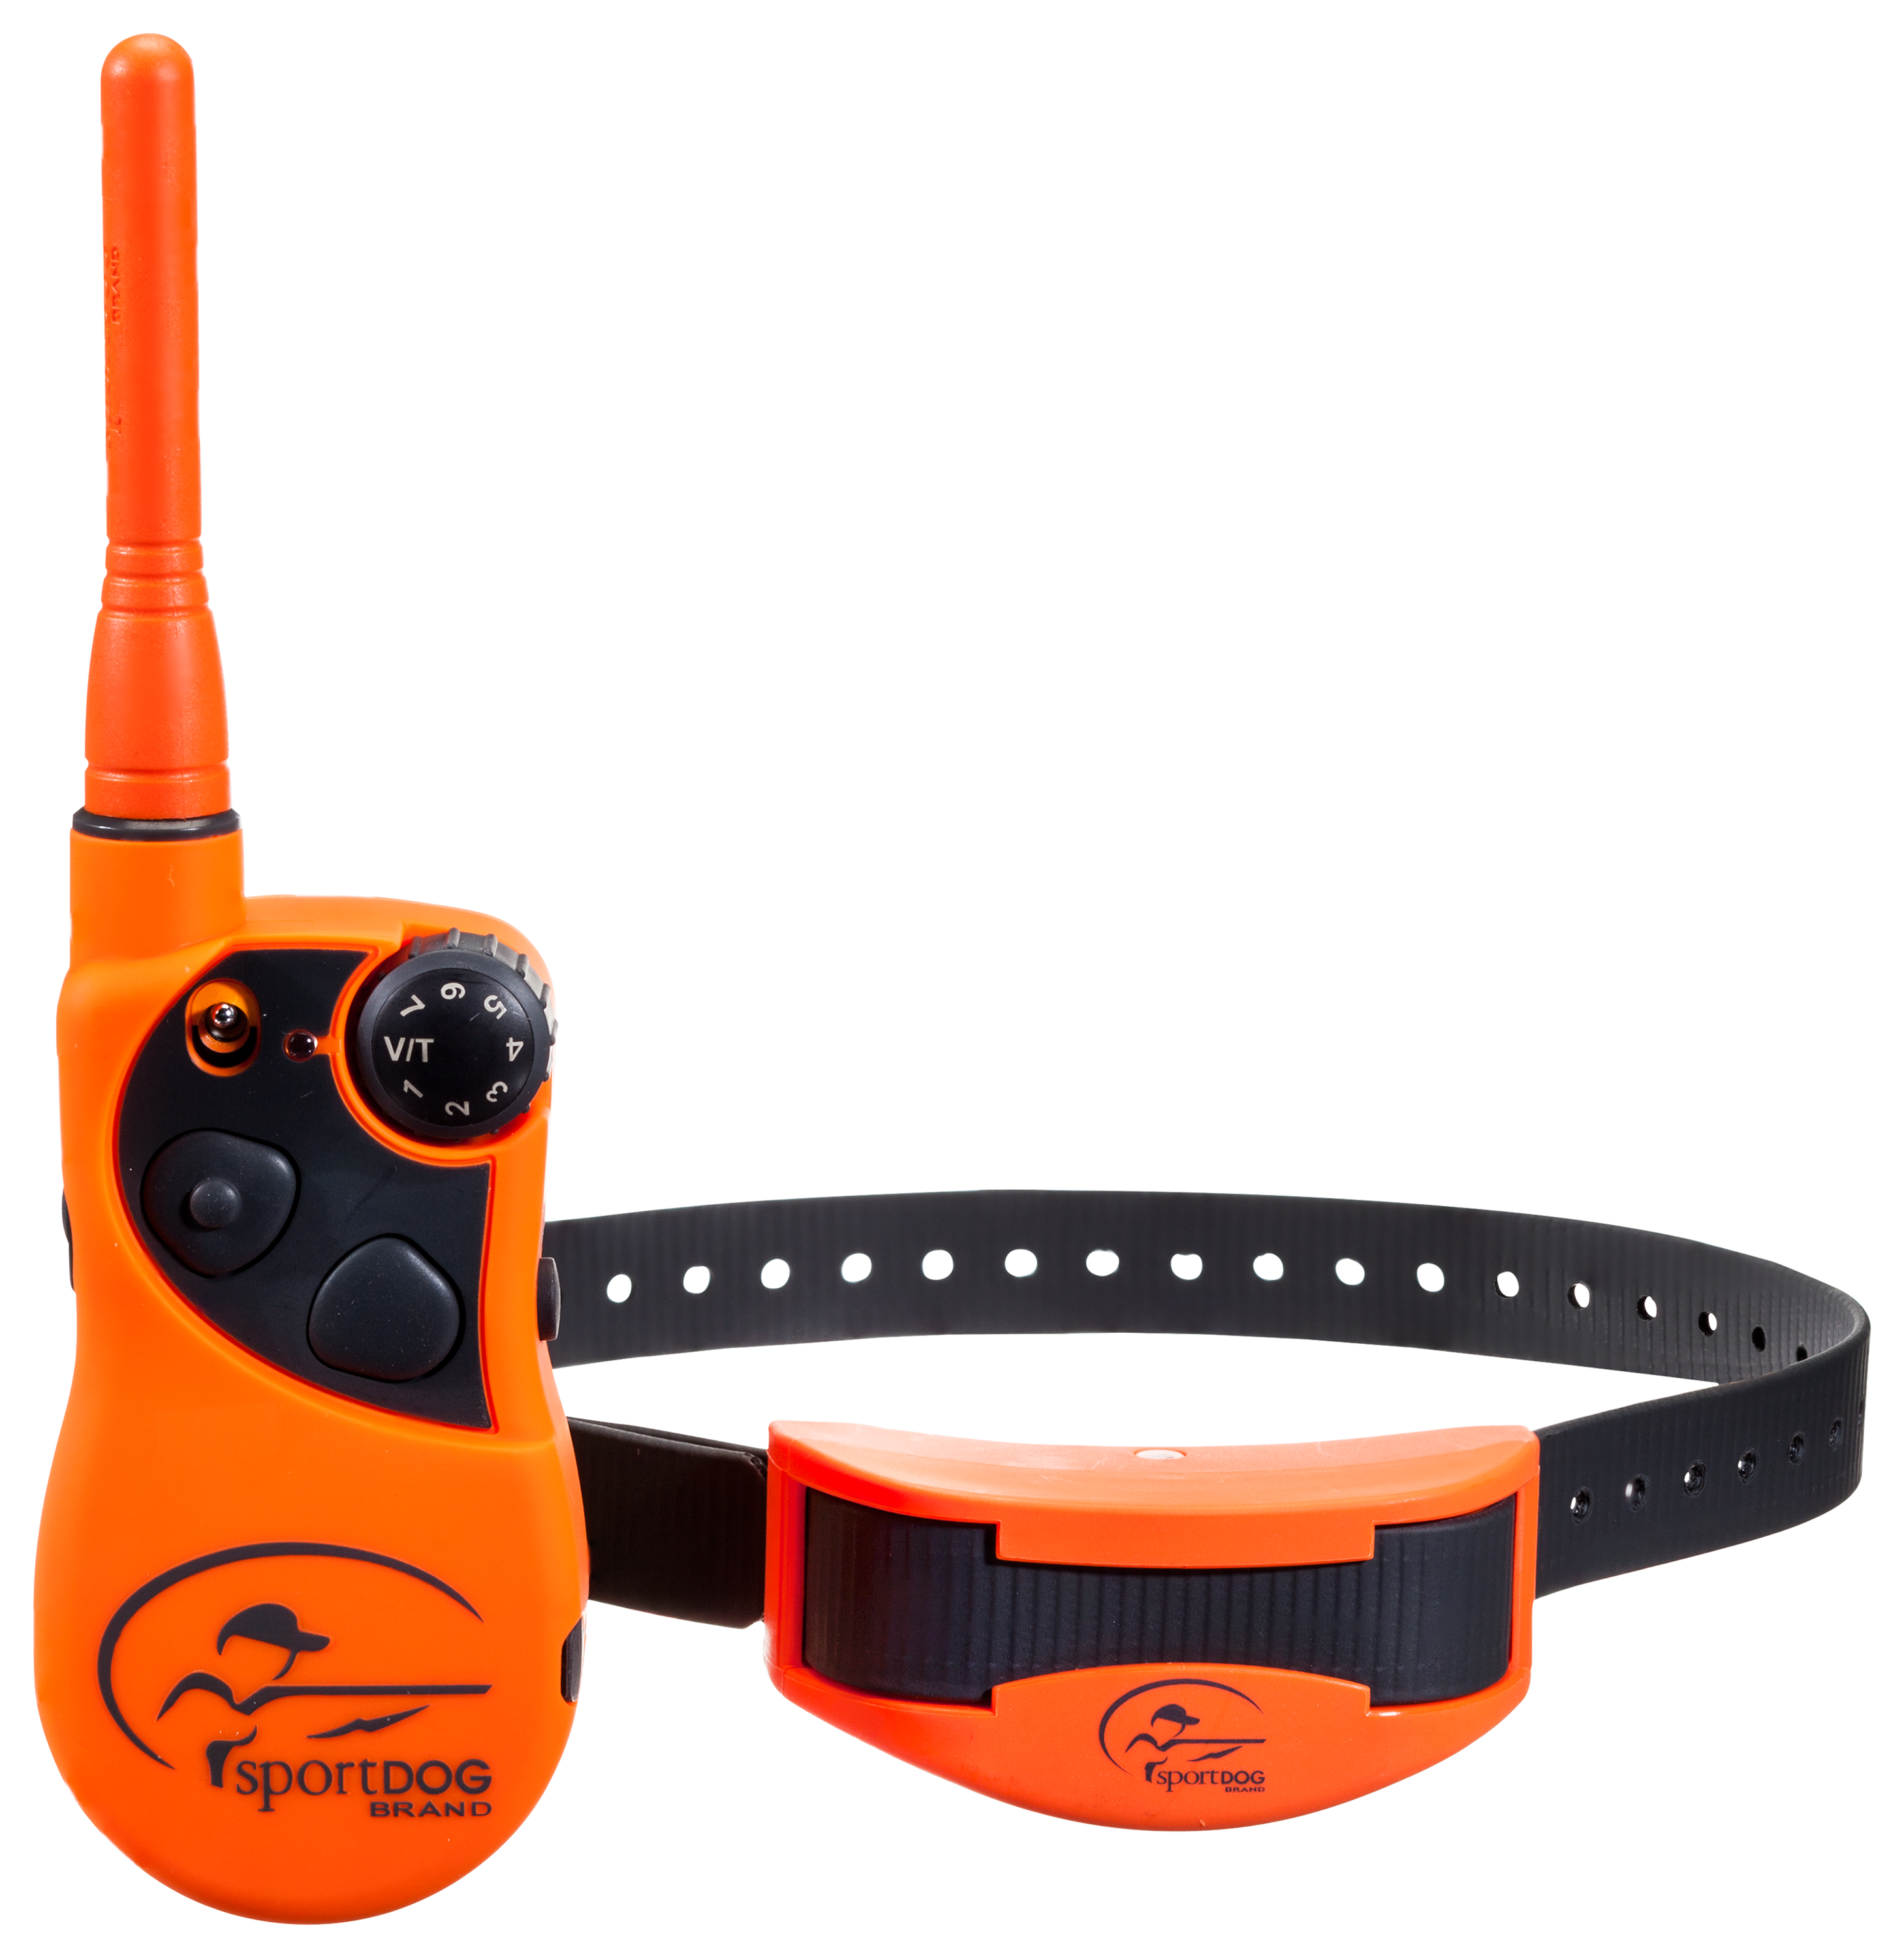 SportDOG Brand HoundHunter 3225 Electronic Collar Dog Training